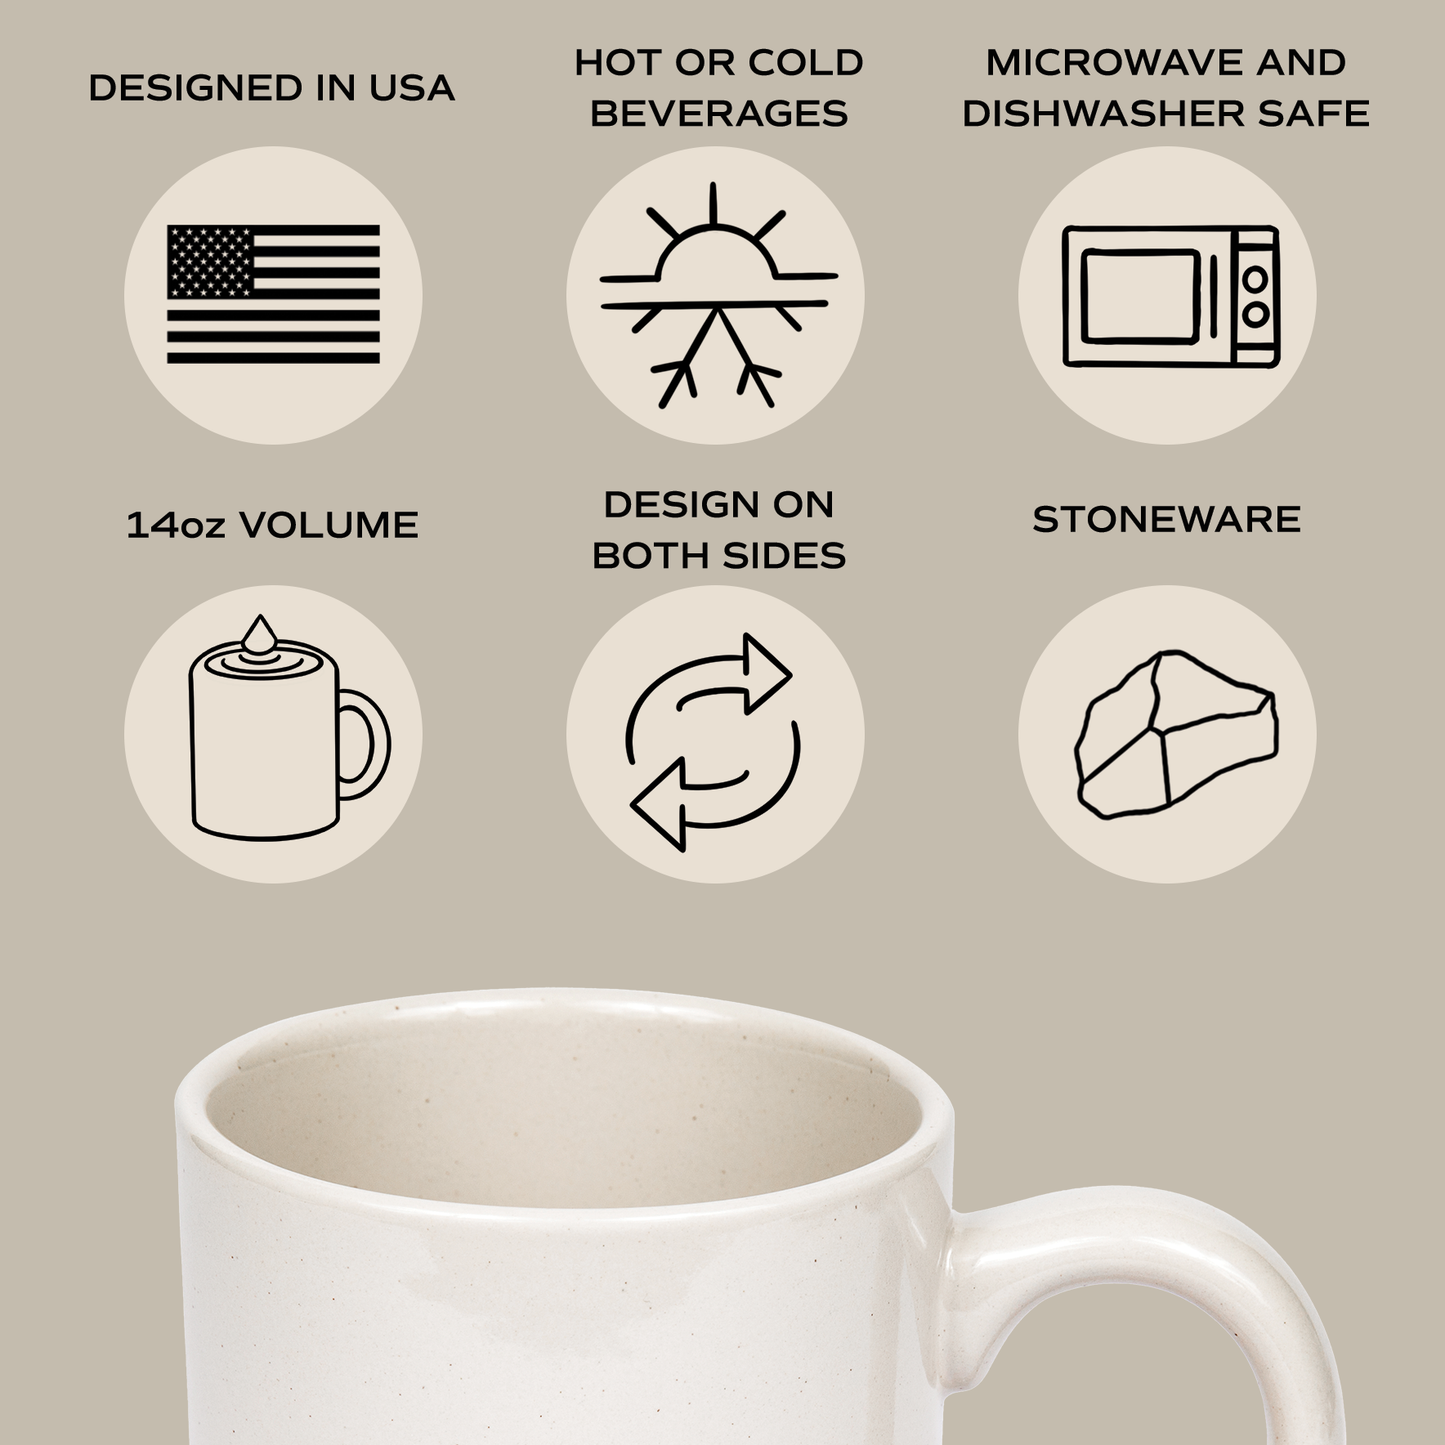 Relax, Girl Stoneware Coffee Mug - Home Decor & Gifts